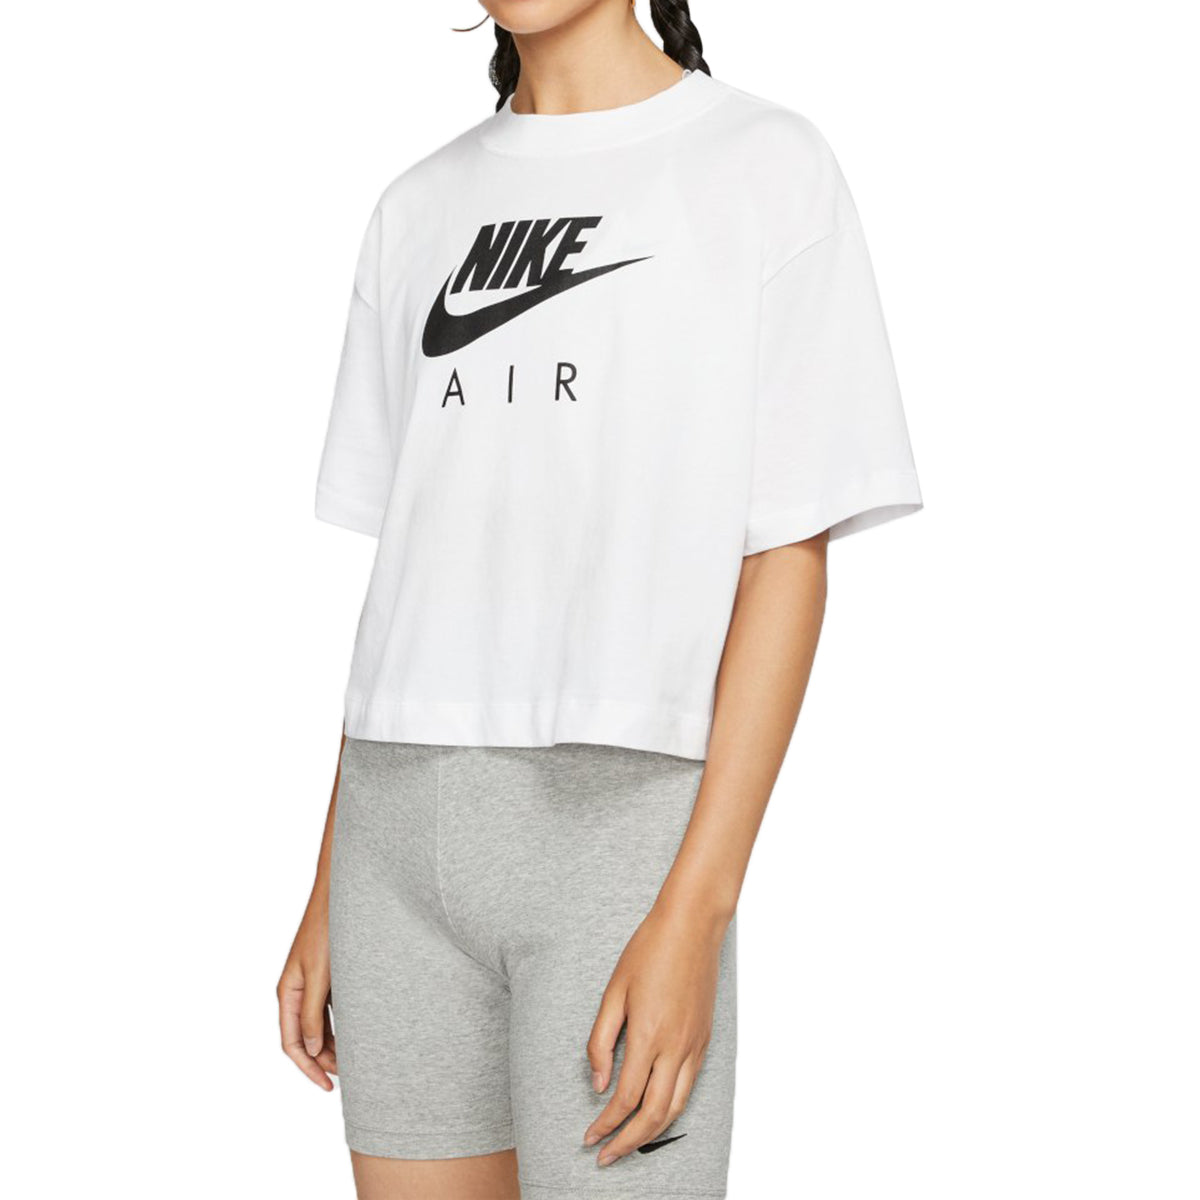 Nike Air Short Sleeve Top Womens Style : Bv4777